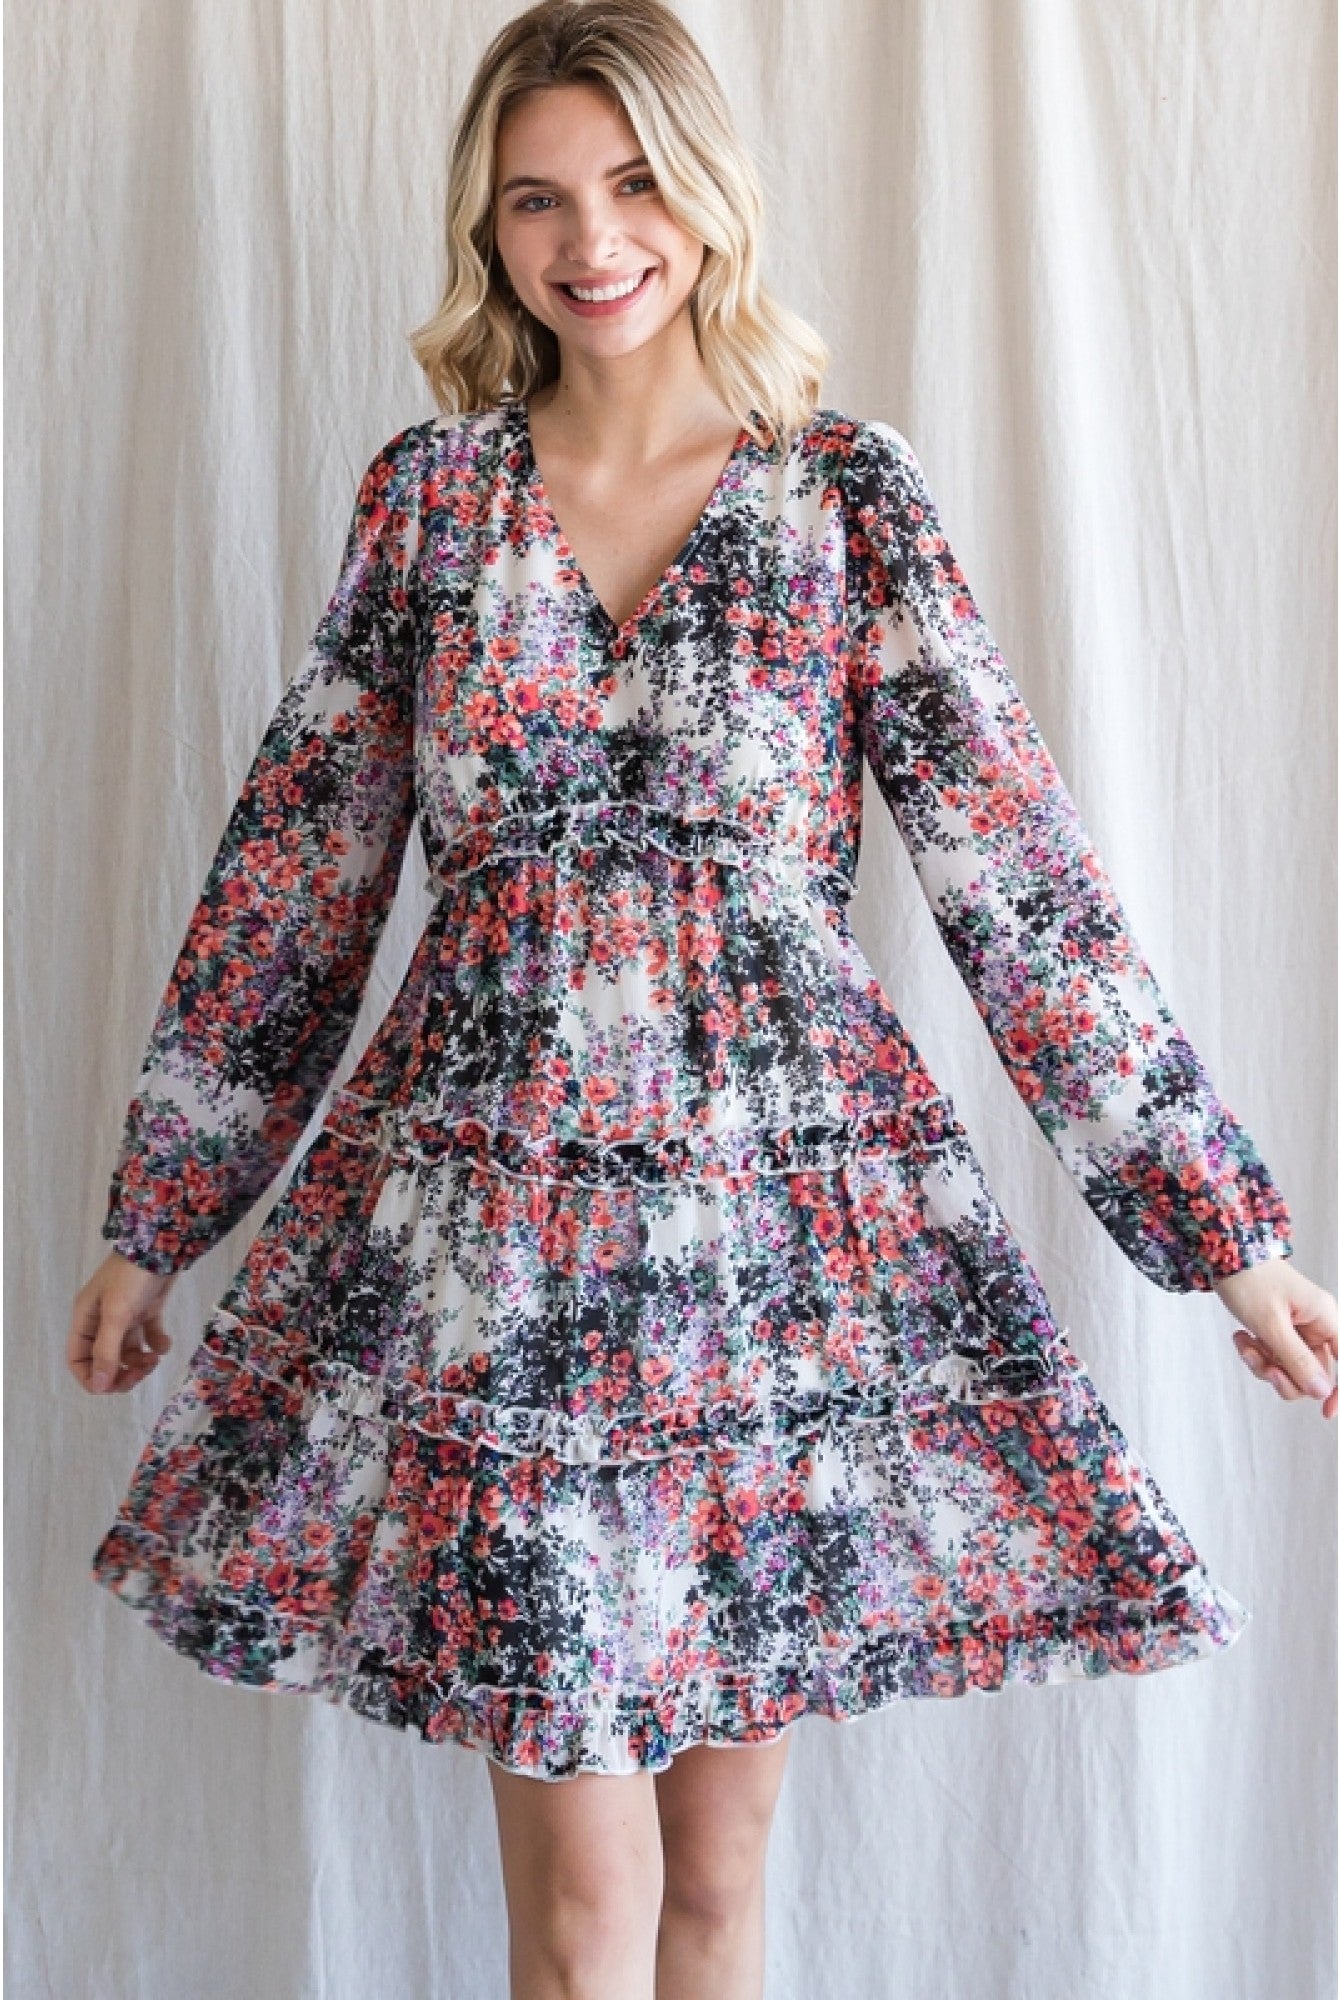 Long Sleeve Floral Dress-Short Dresses-Podos Boutique, a Women's Fashion Boutique Located in Calera, AL